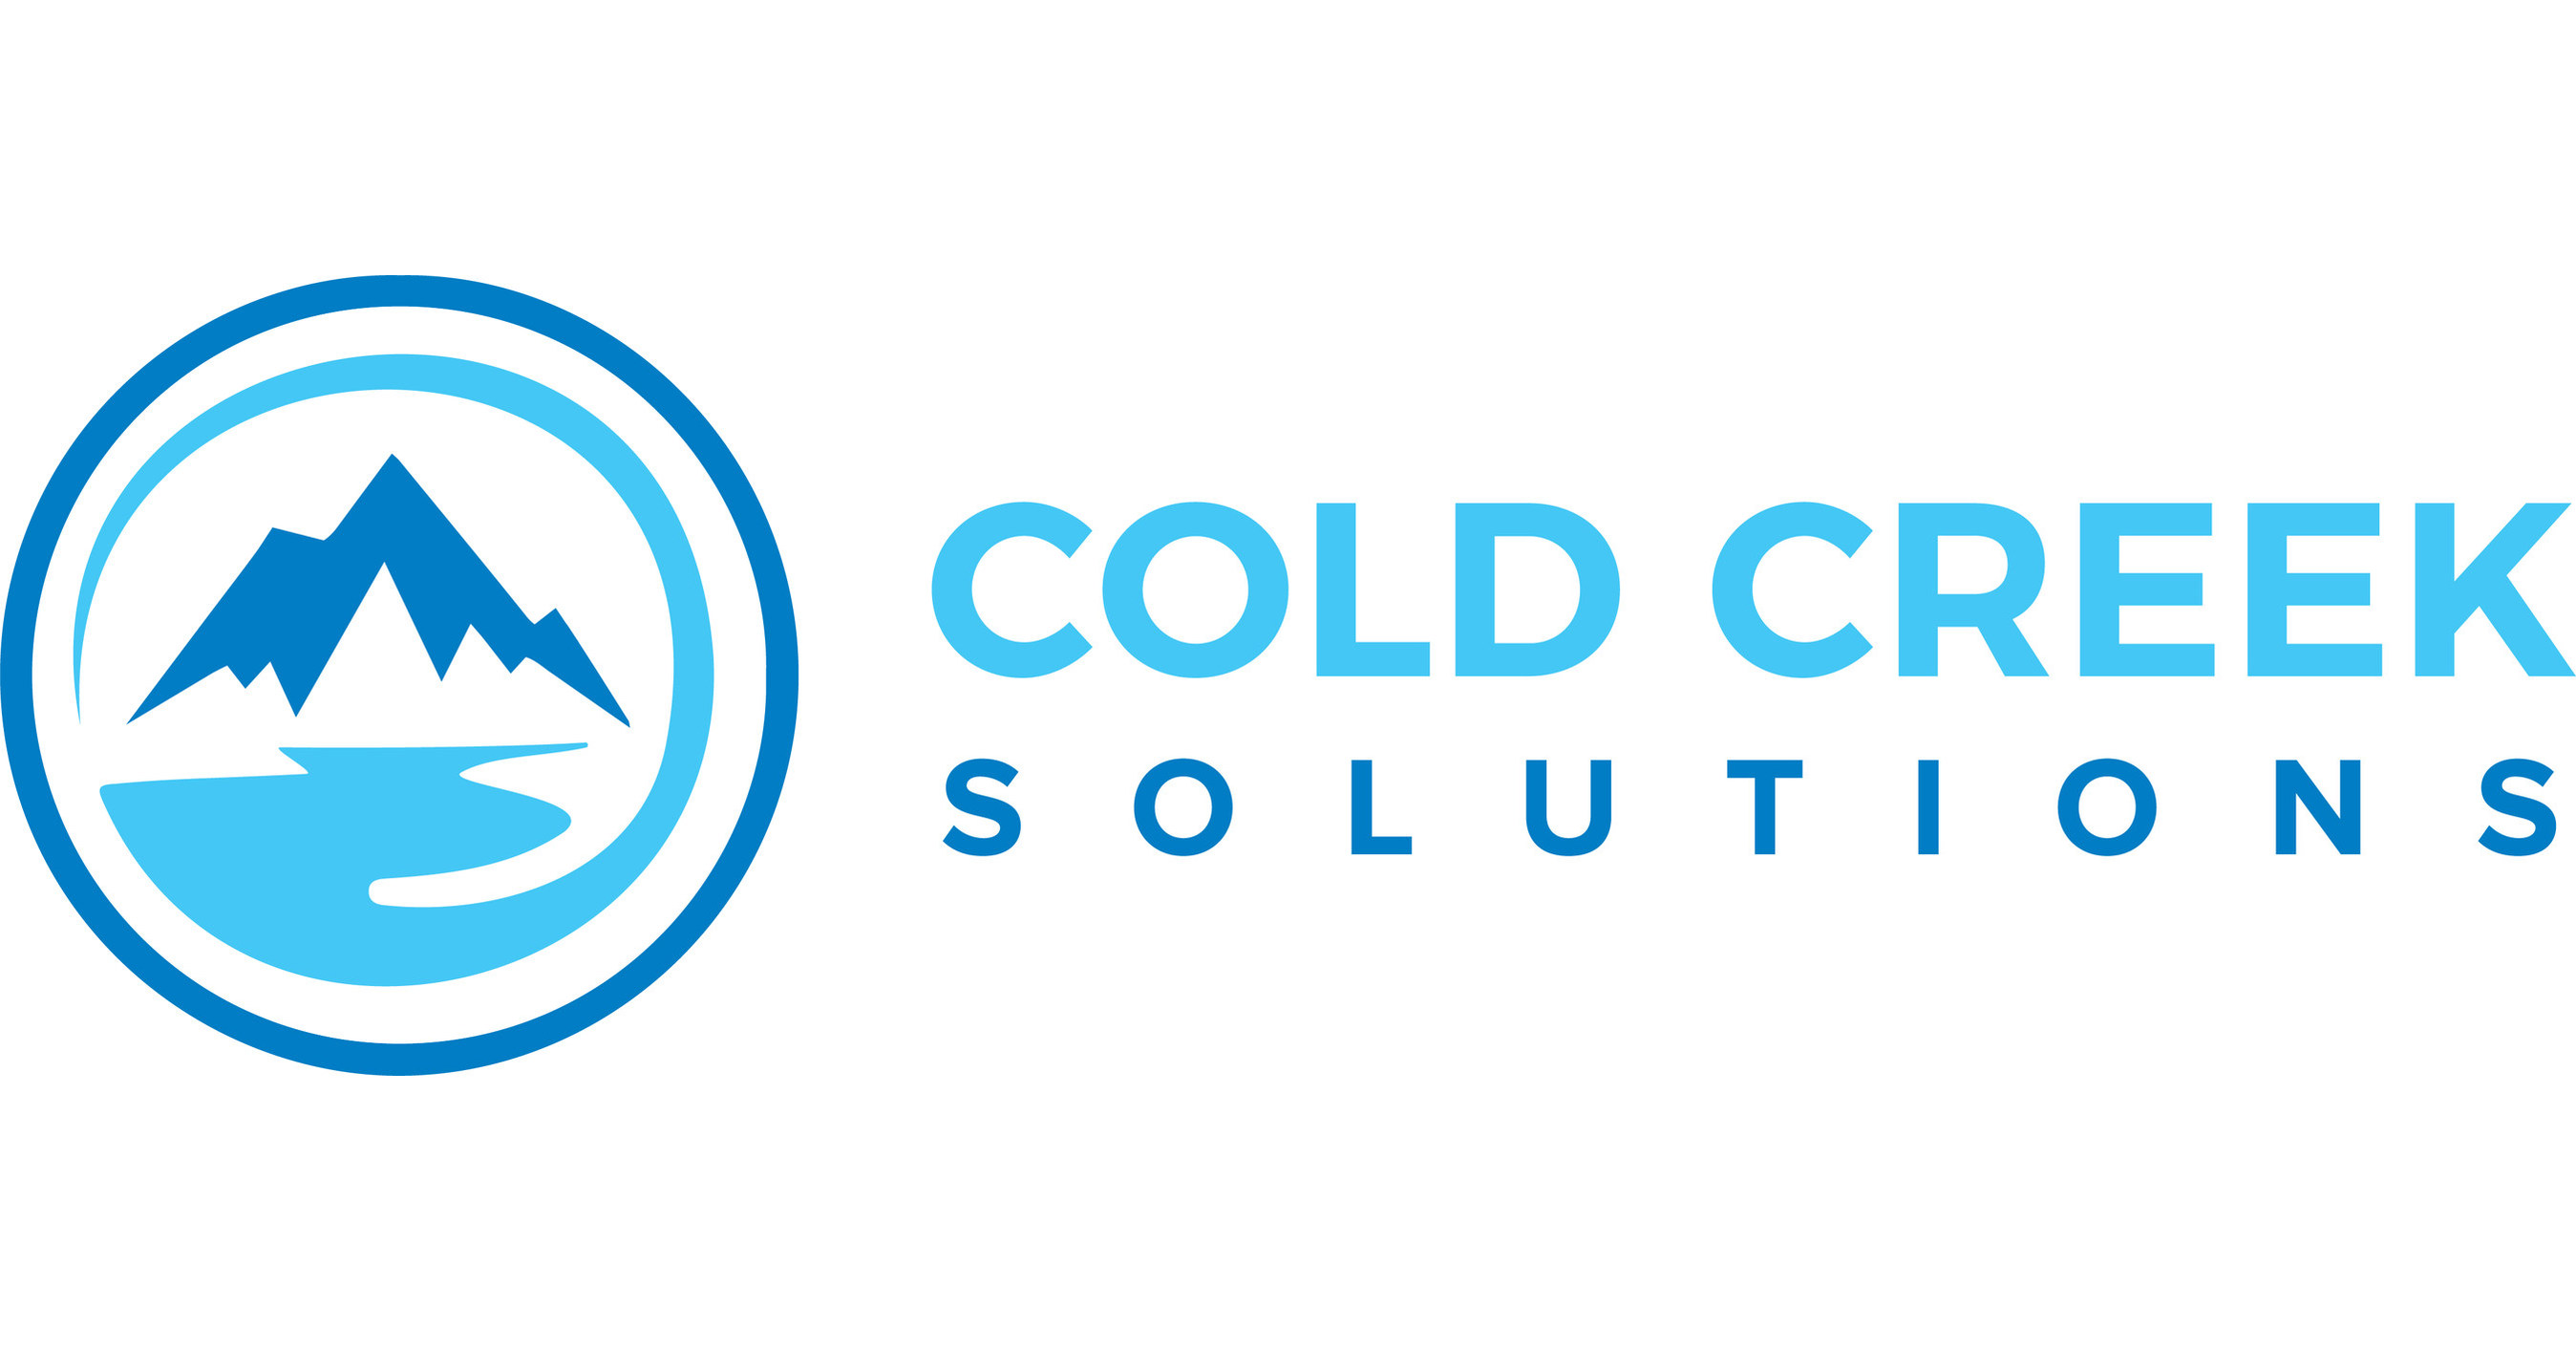 Coldwater Creek - Company Profile - Tracxn